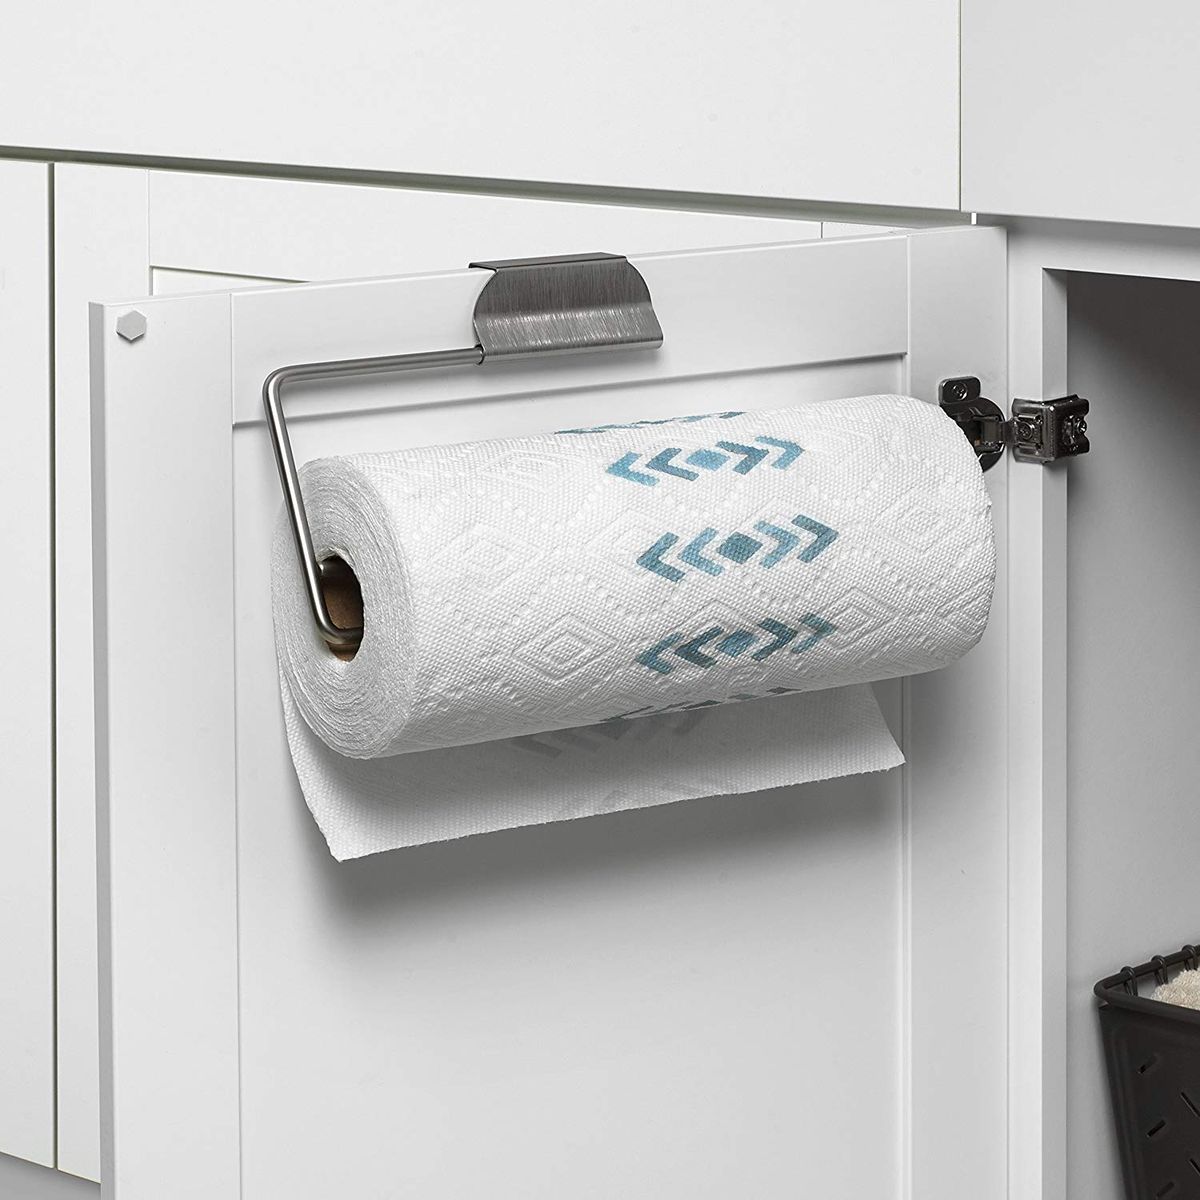 7 Best Paper Towel Holders To 2019, Bathroom Paper Towels Dispenser